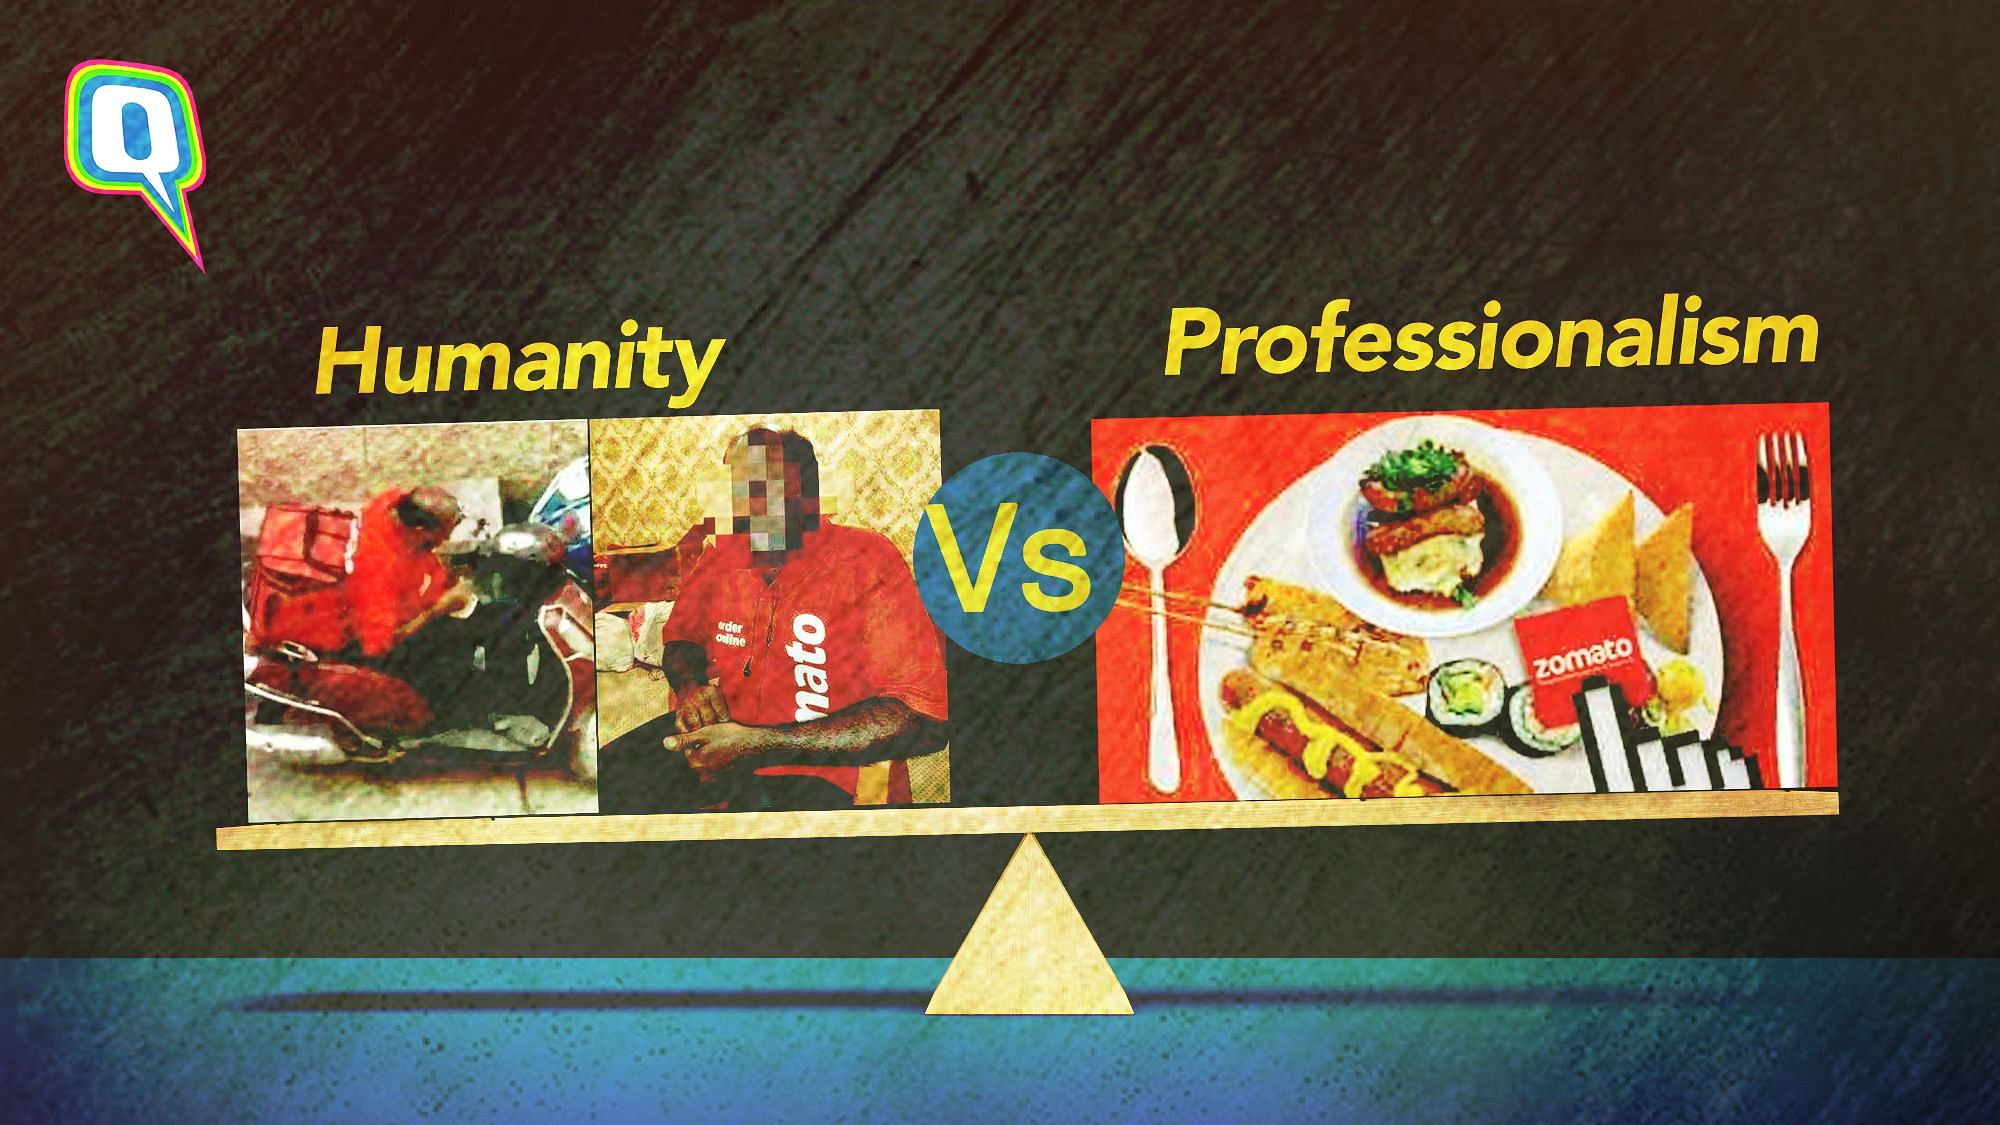 Humanity versus professionalism